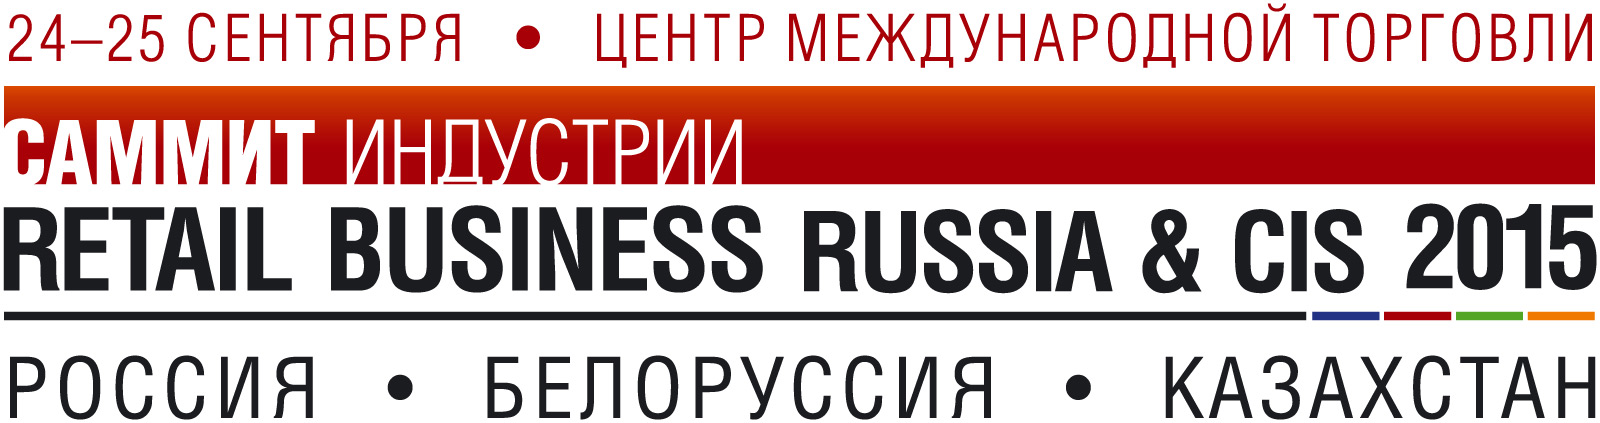 Retail Business Russia & EAEU 2015